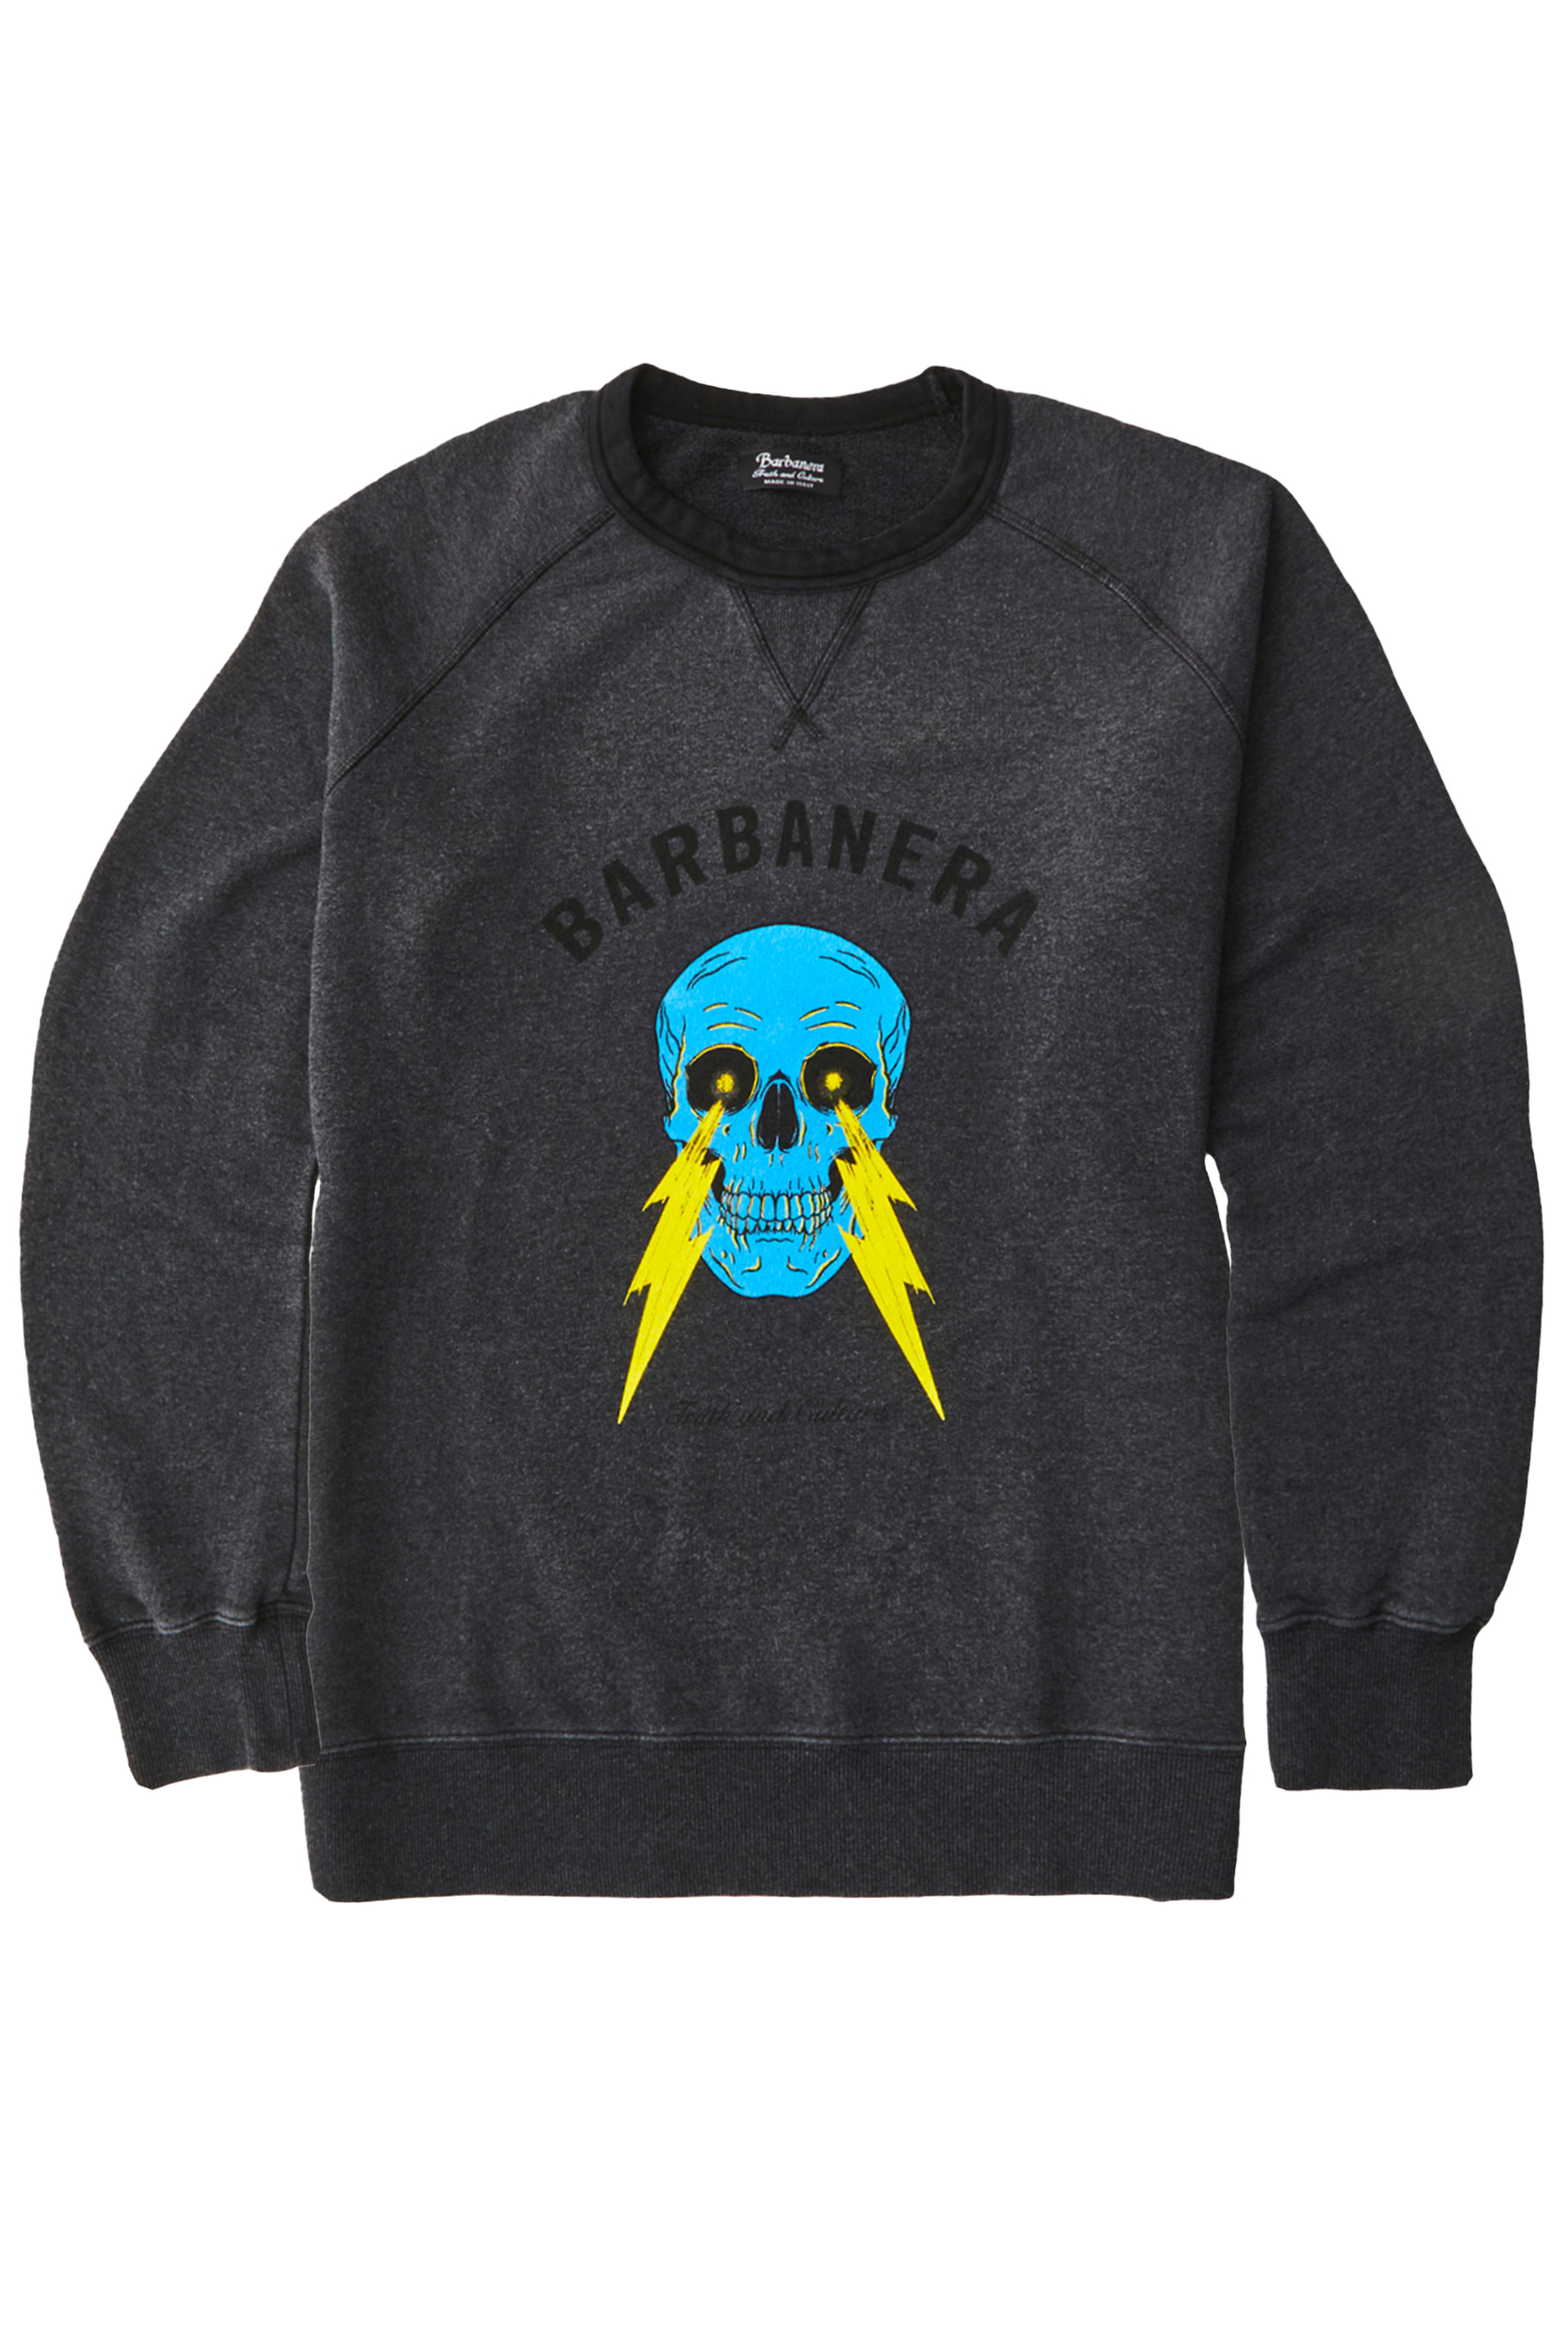 Meroni Vintage Black Crew Neck Cotton Skull And Lightning Bolt Graphic  Sweatshirt - Barbanera